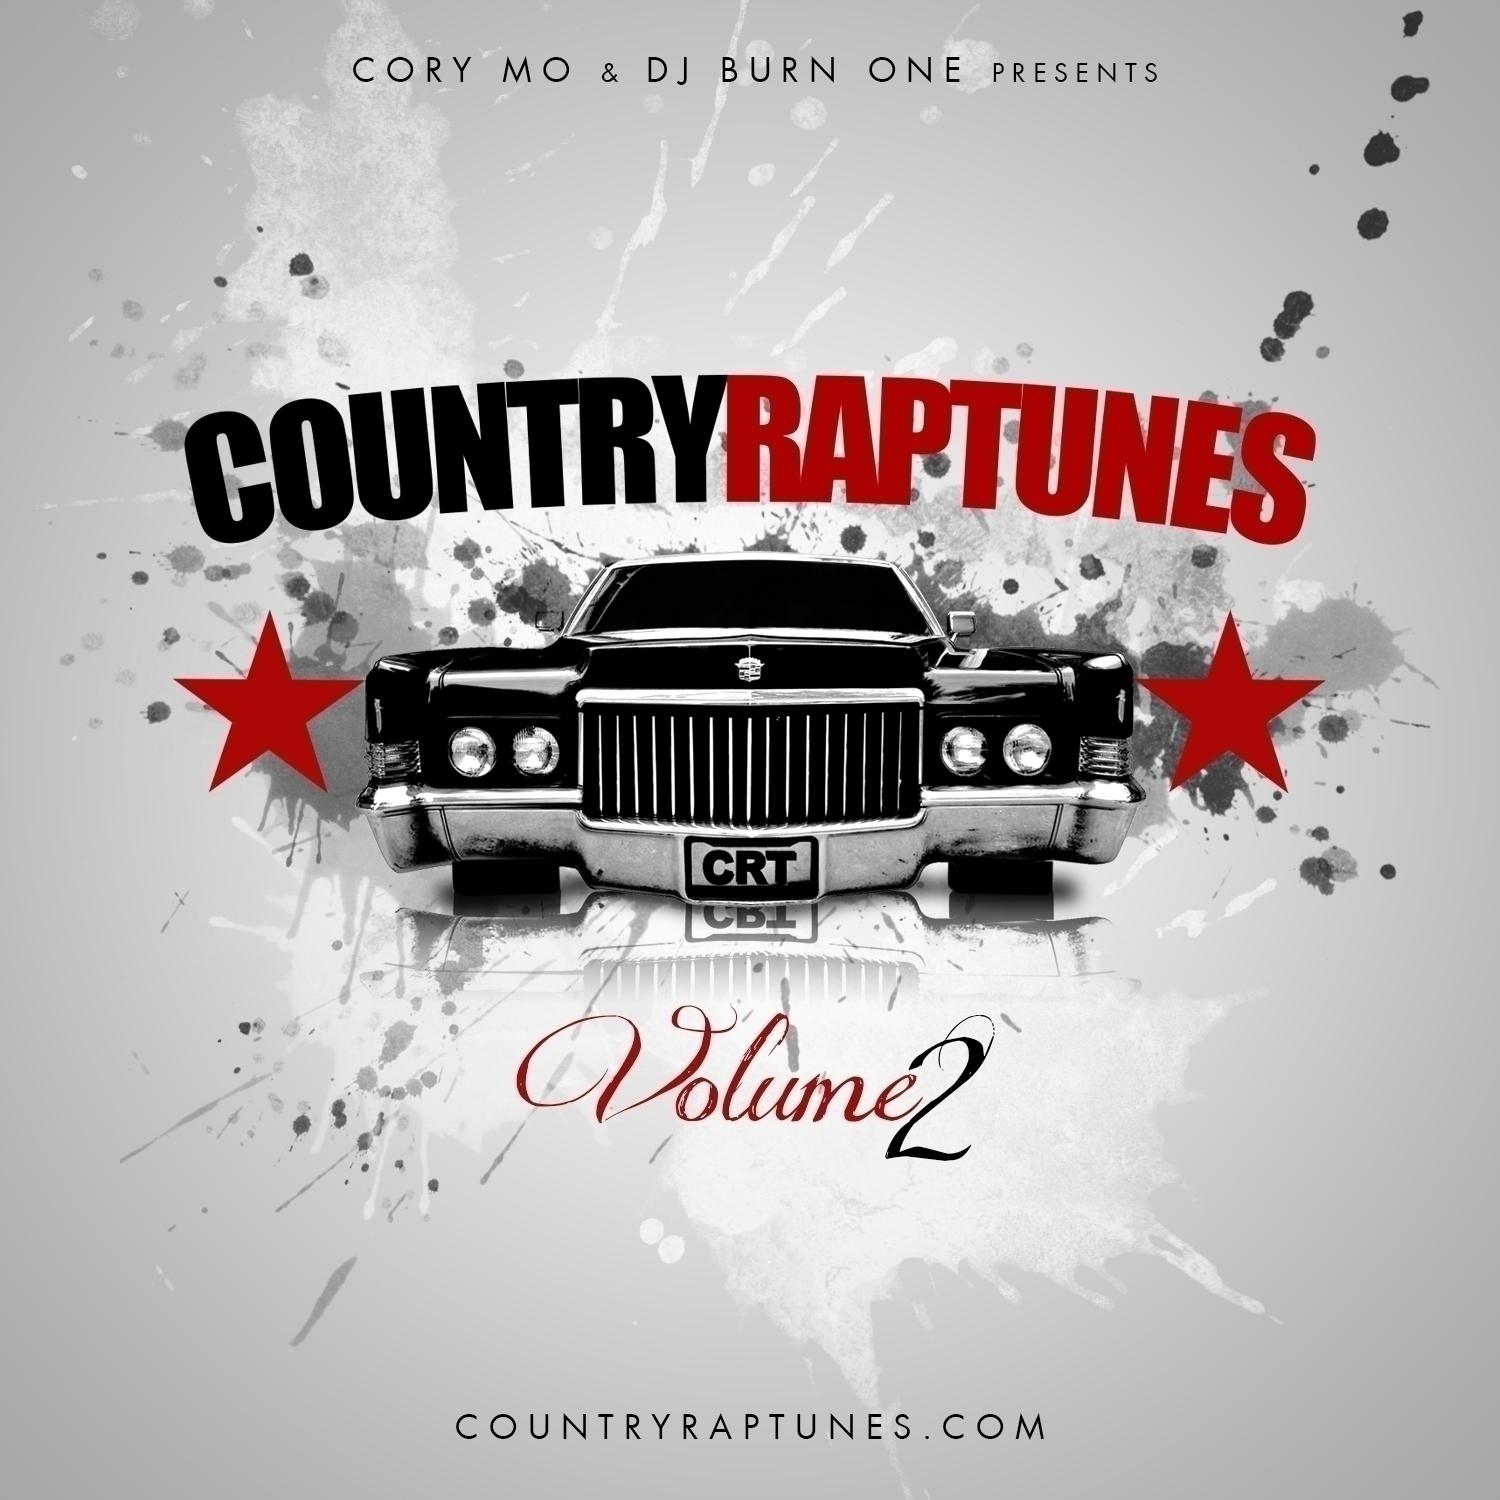 Cory Mo & Dj Burn One Present: Country Raptunes, Vol. 2